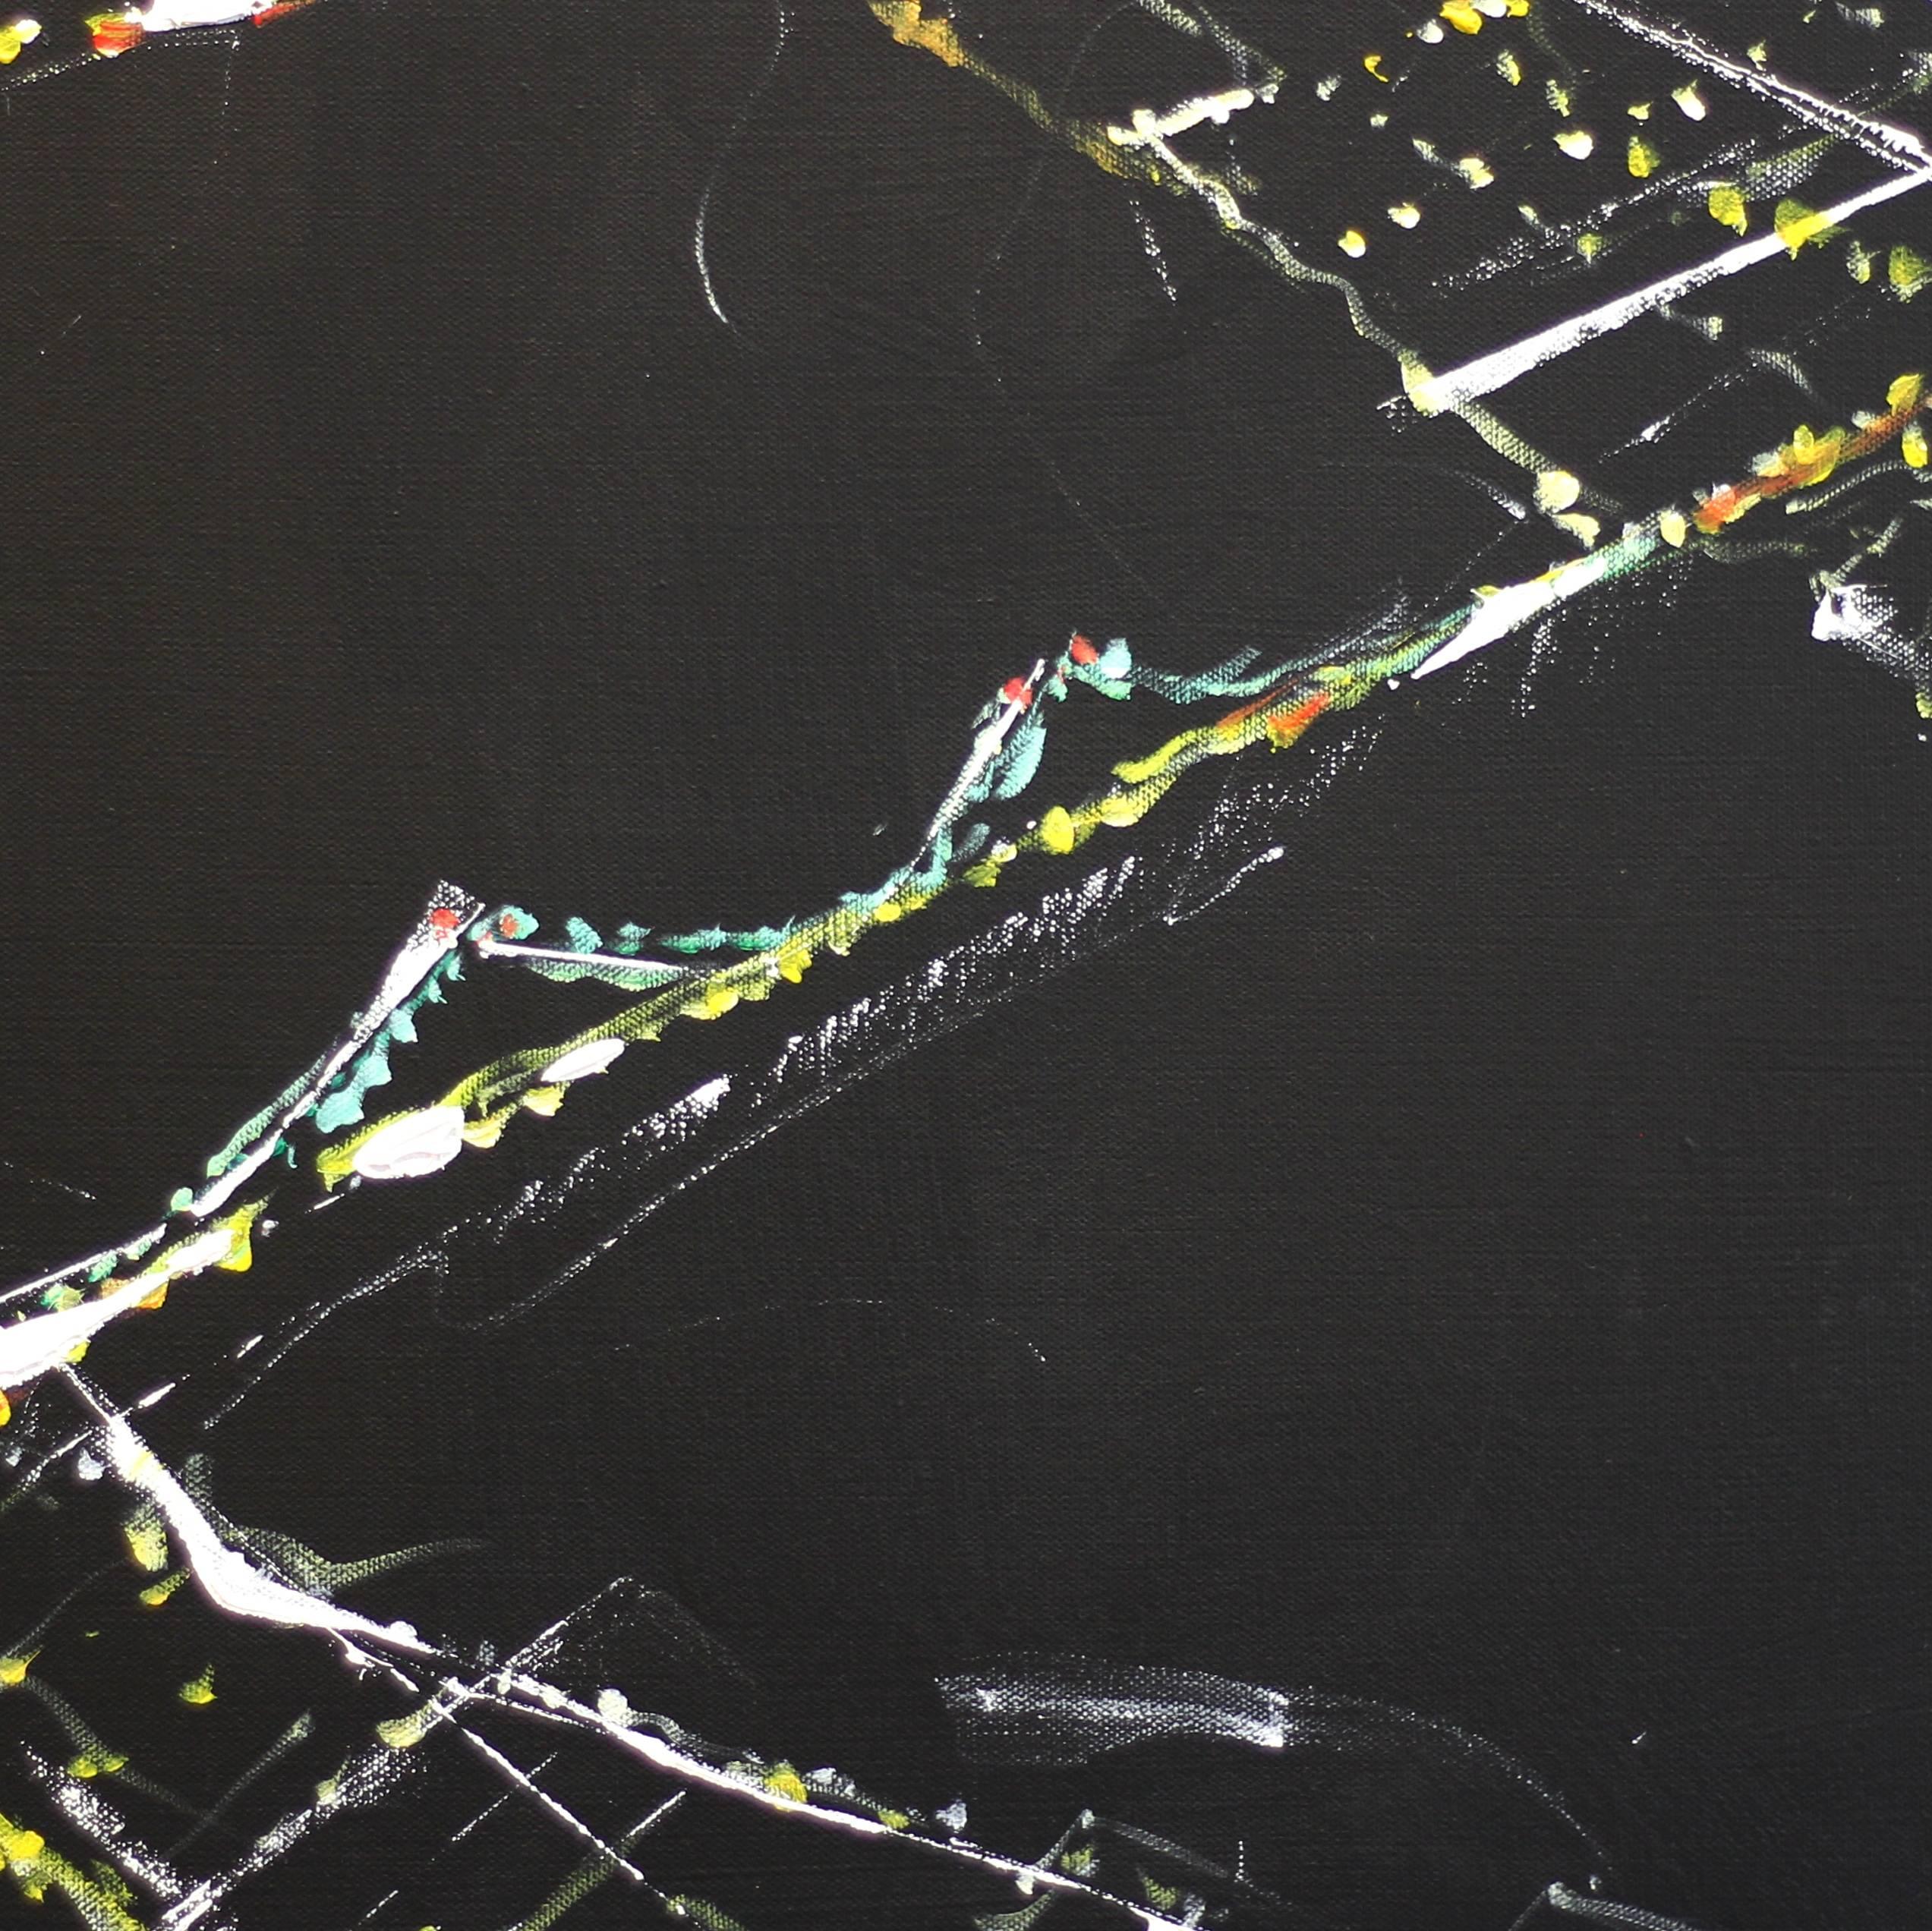 East Side New York Aerial - Black Landscape Painting by Pete Kasprzak